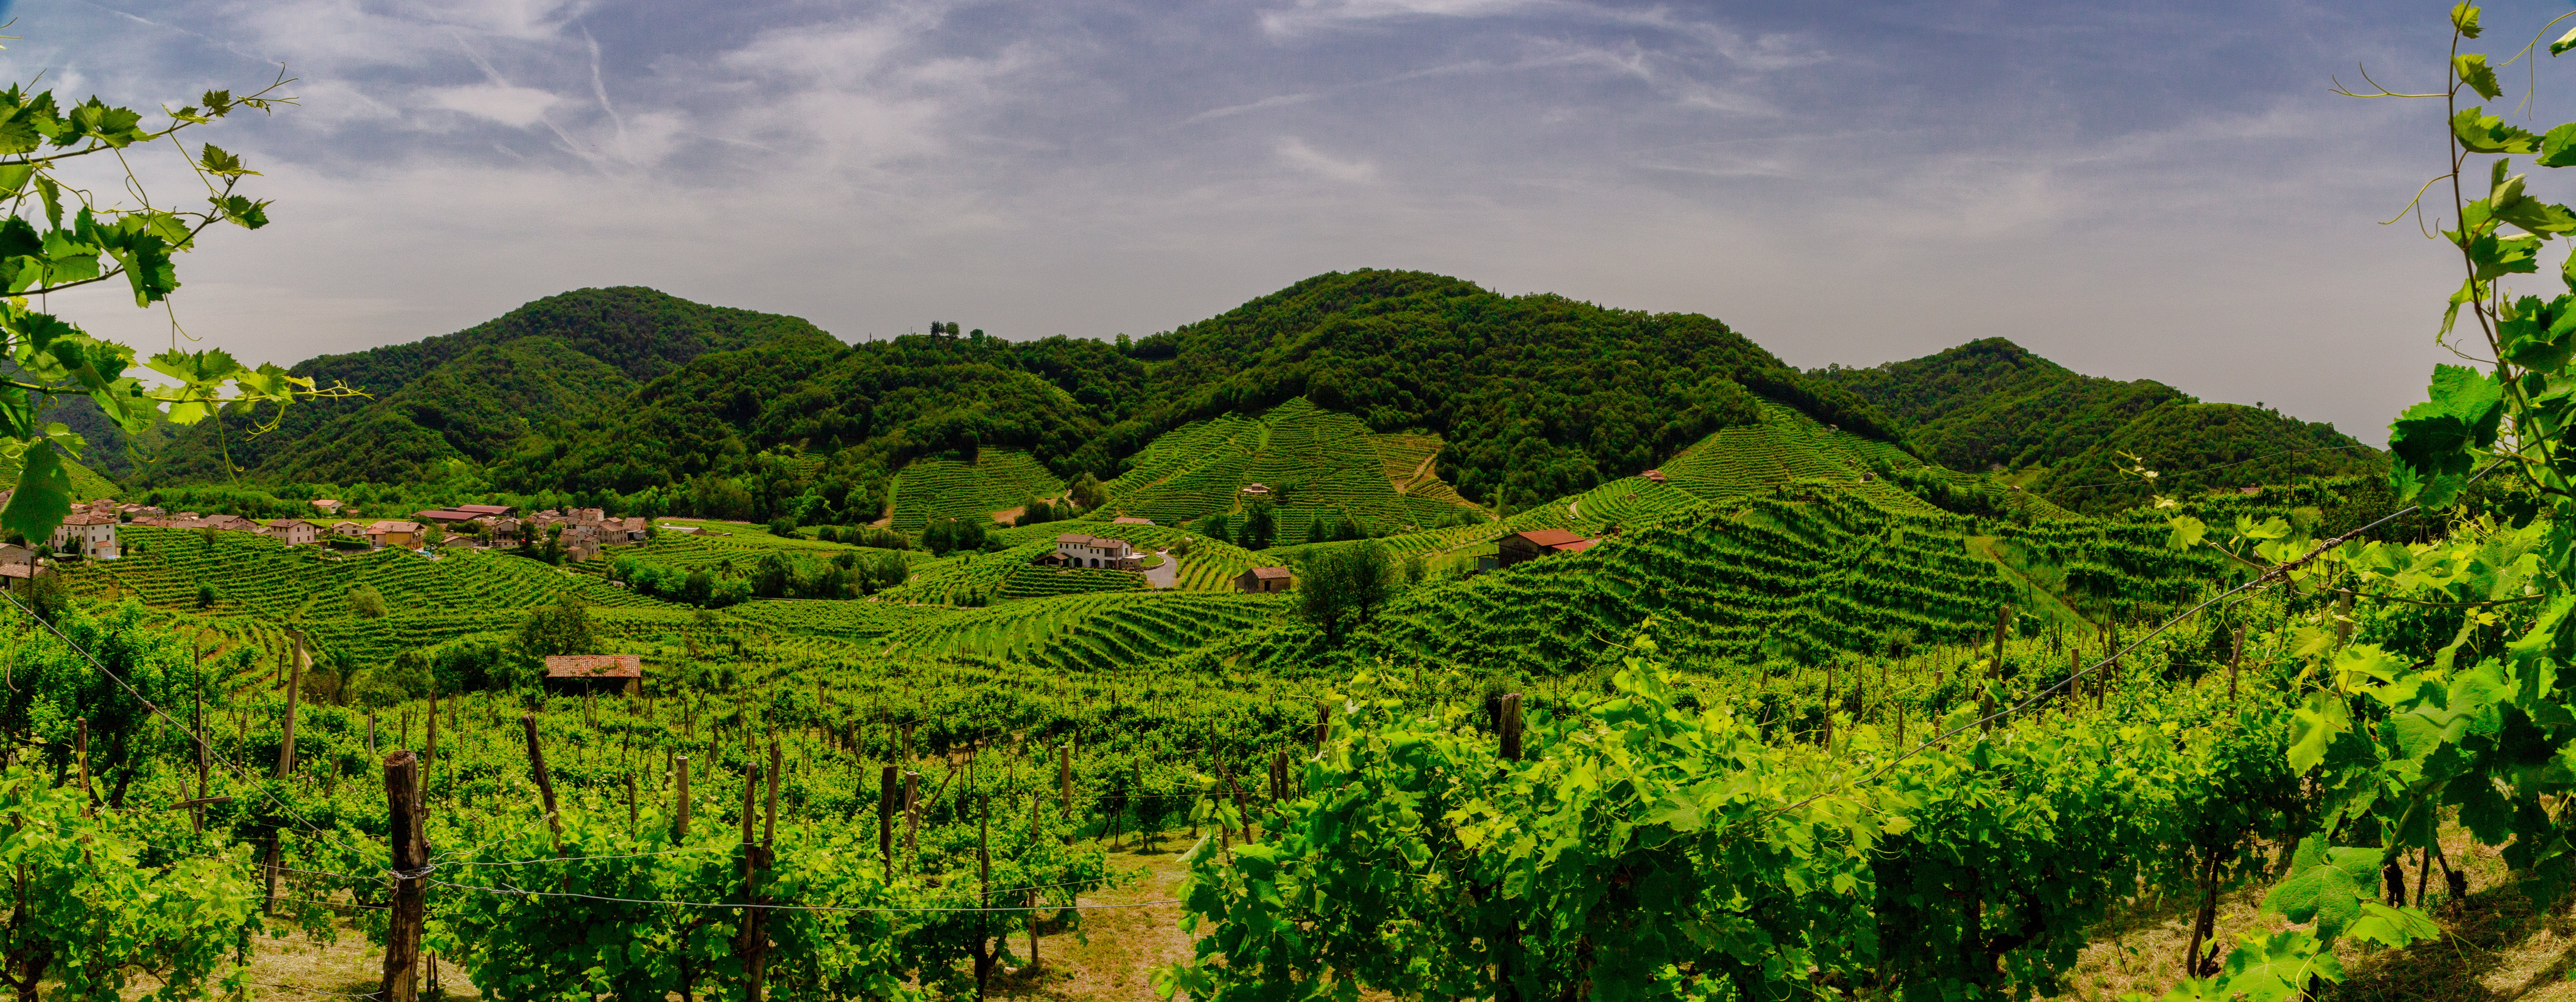 italian prosecco vineyards